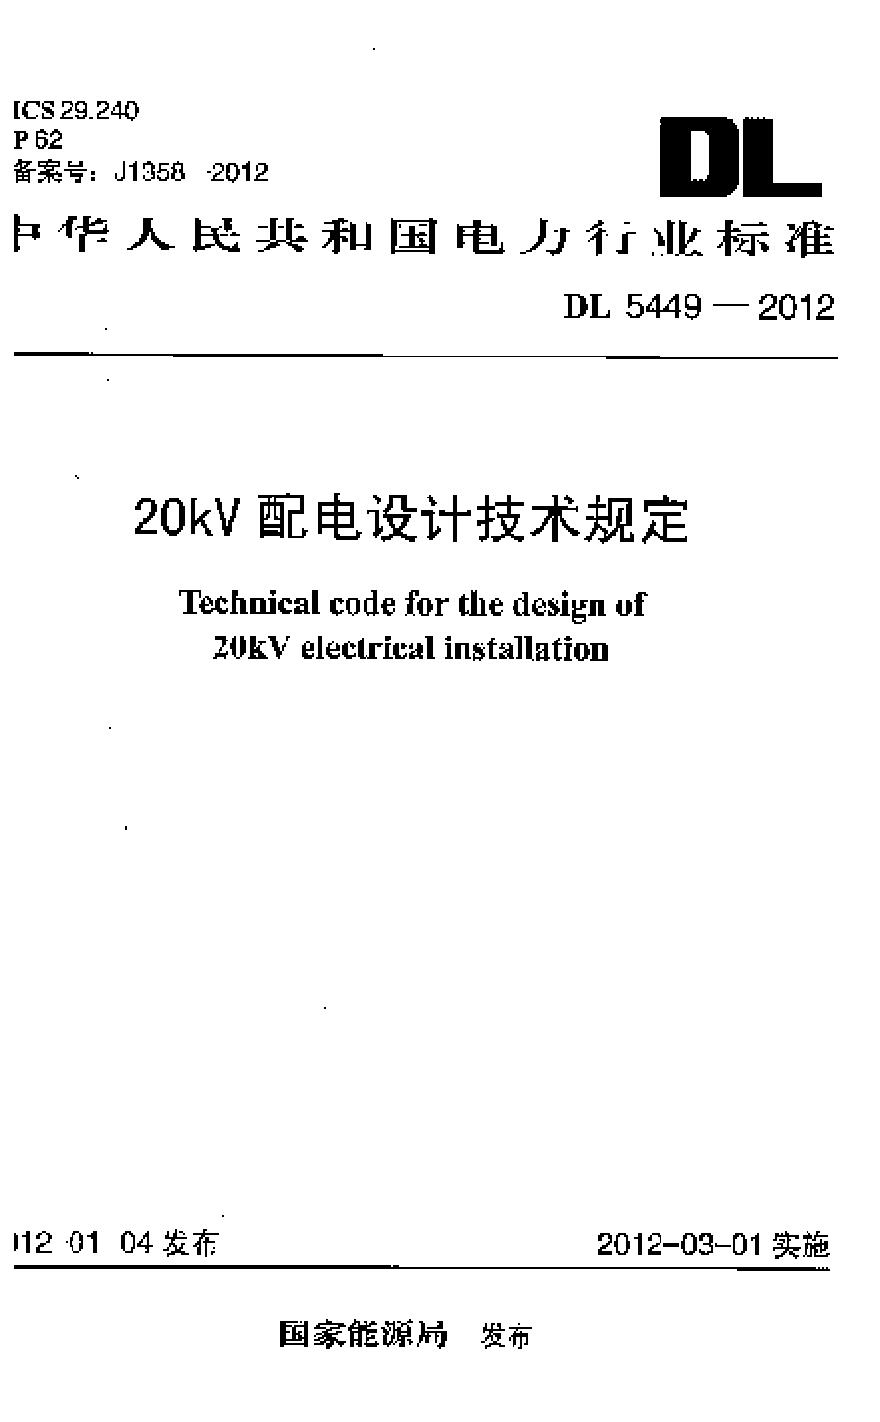 DL 5449-2012 20kV配电设计技术规定